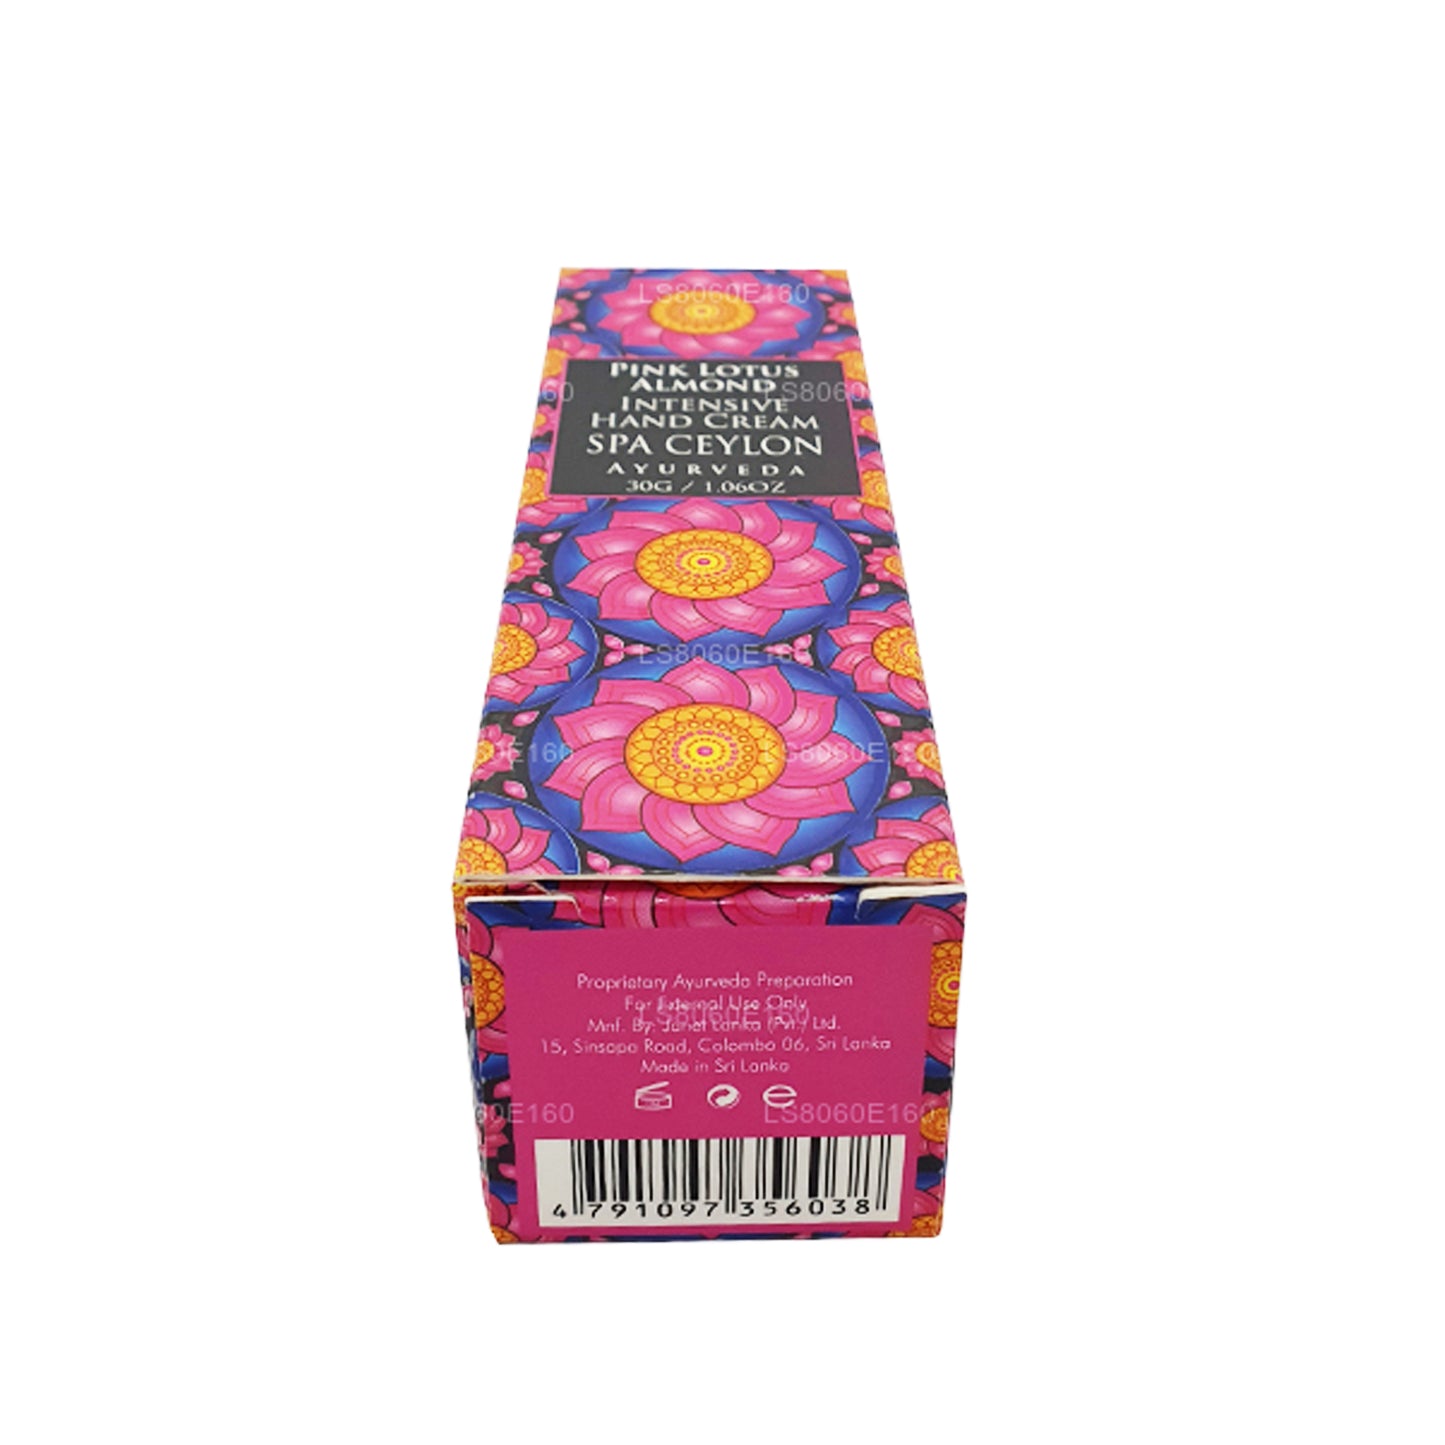 Crème intensive pour les mains Spa Ceylon Pink Lotus Almond (30 g)